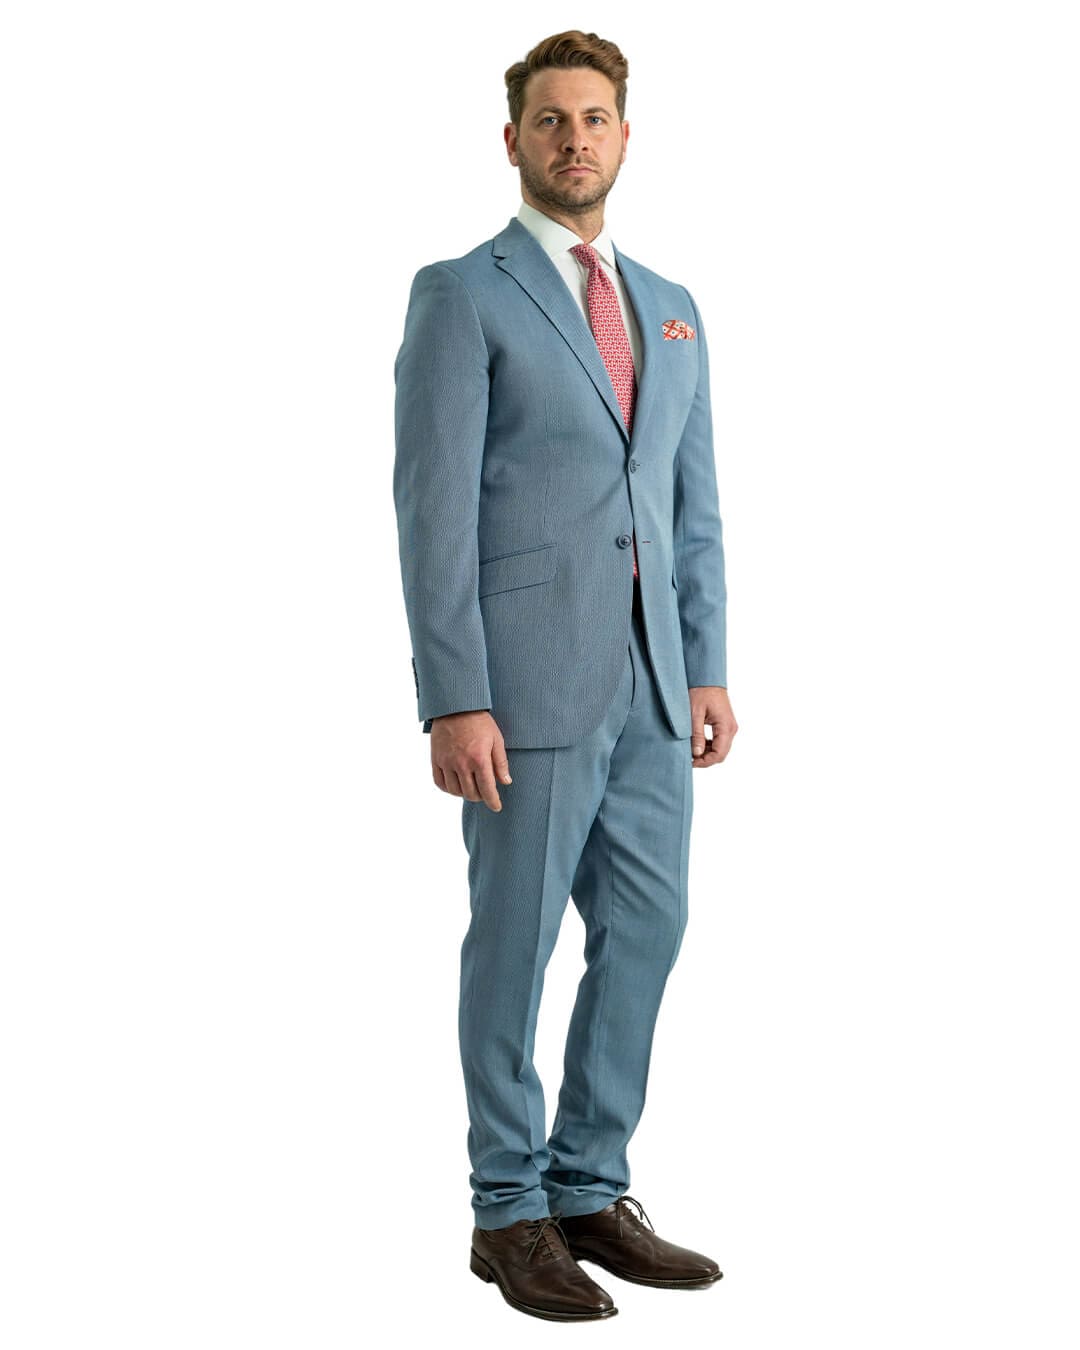 Gagliardi Suits Gagliardi Blue Machine Washable Birdseye Suit